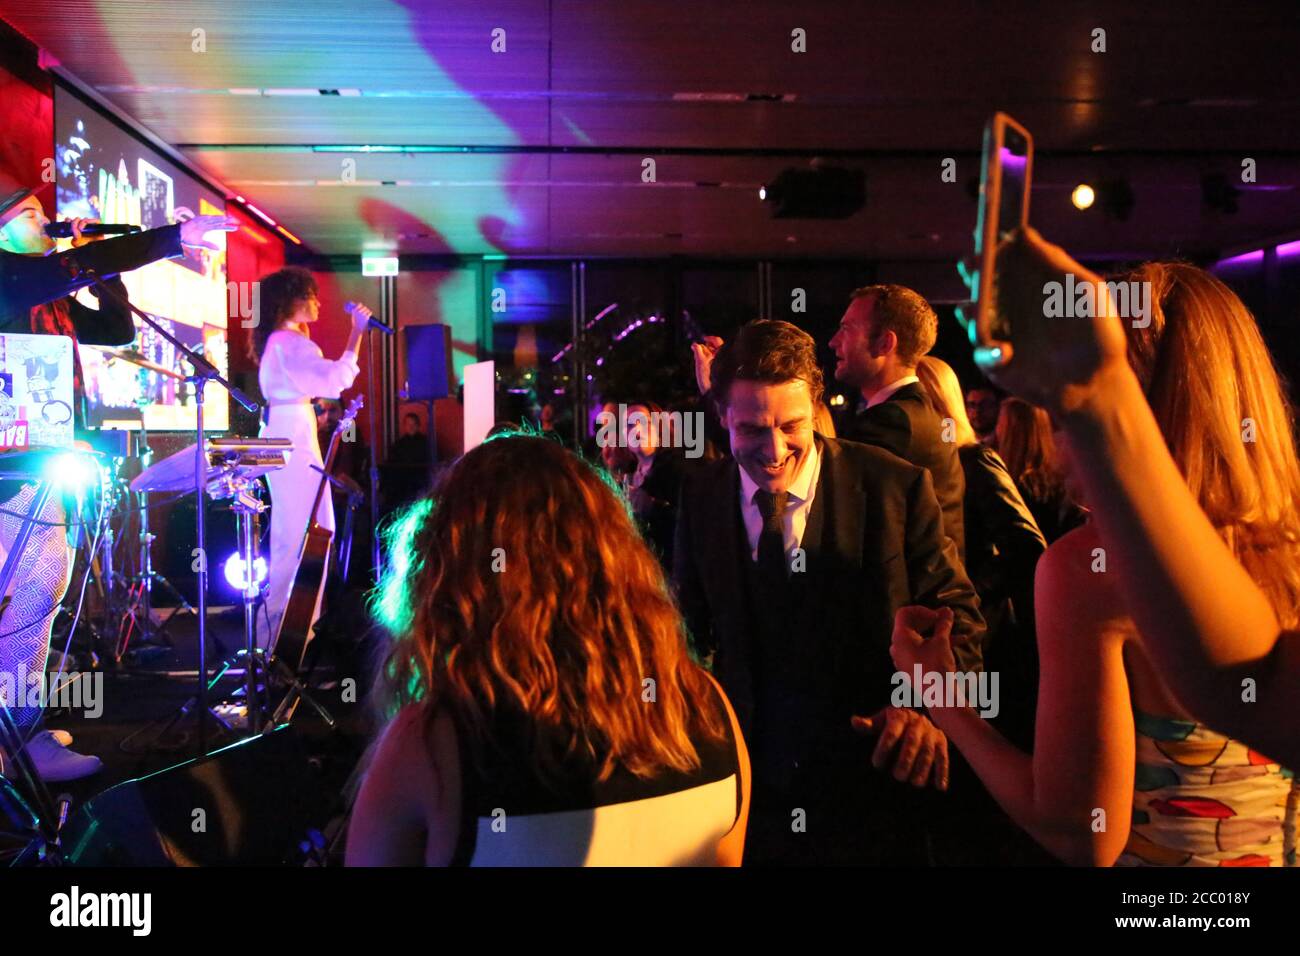 Samuel Johnson (2017 Gold Logie winner) daces to a Guy Sebastian performance at the Sensis x Vivid Sydney CEO Club event. Stock Photo